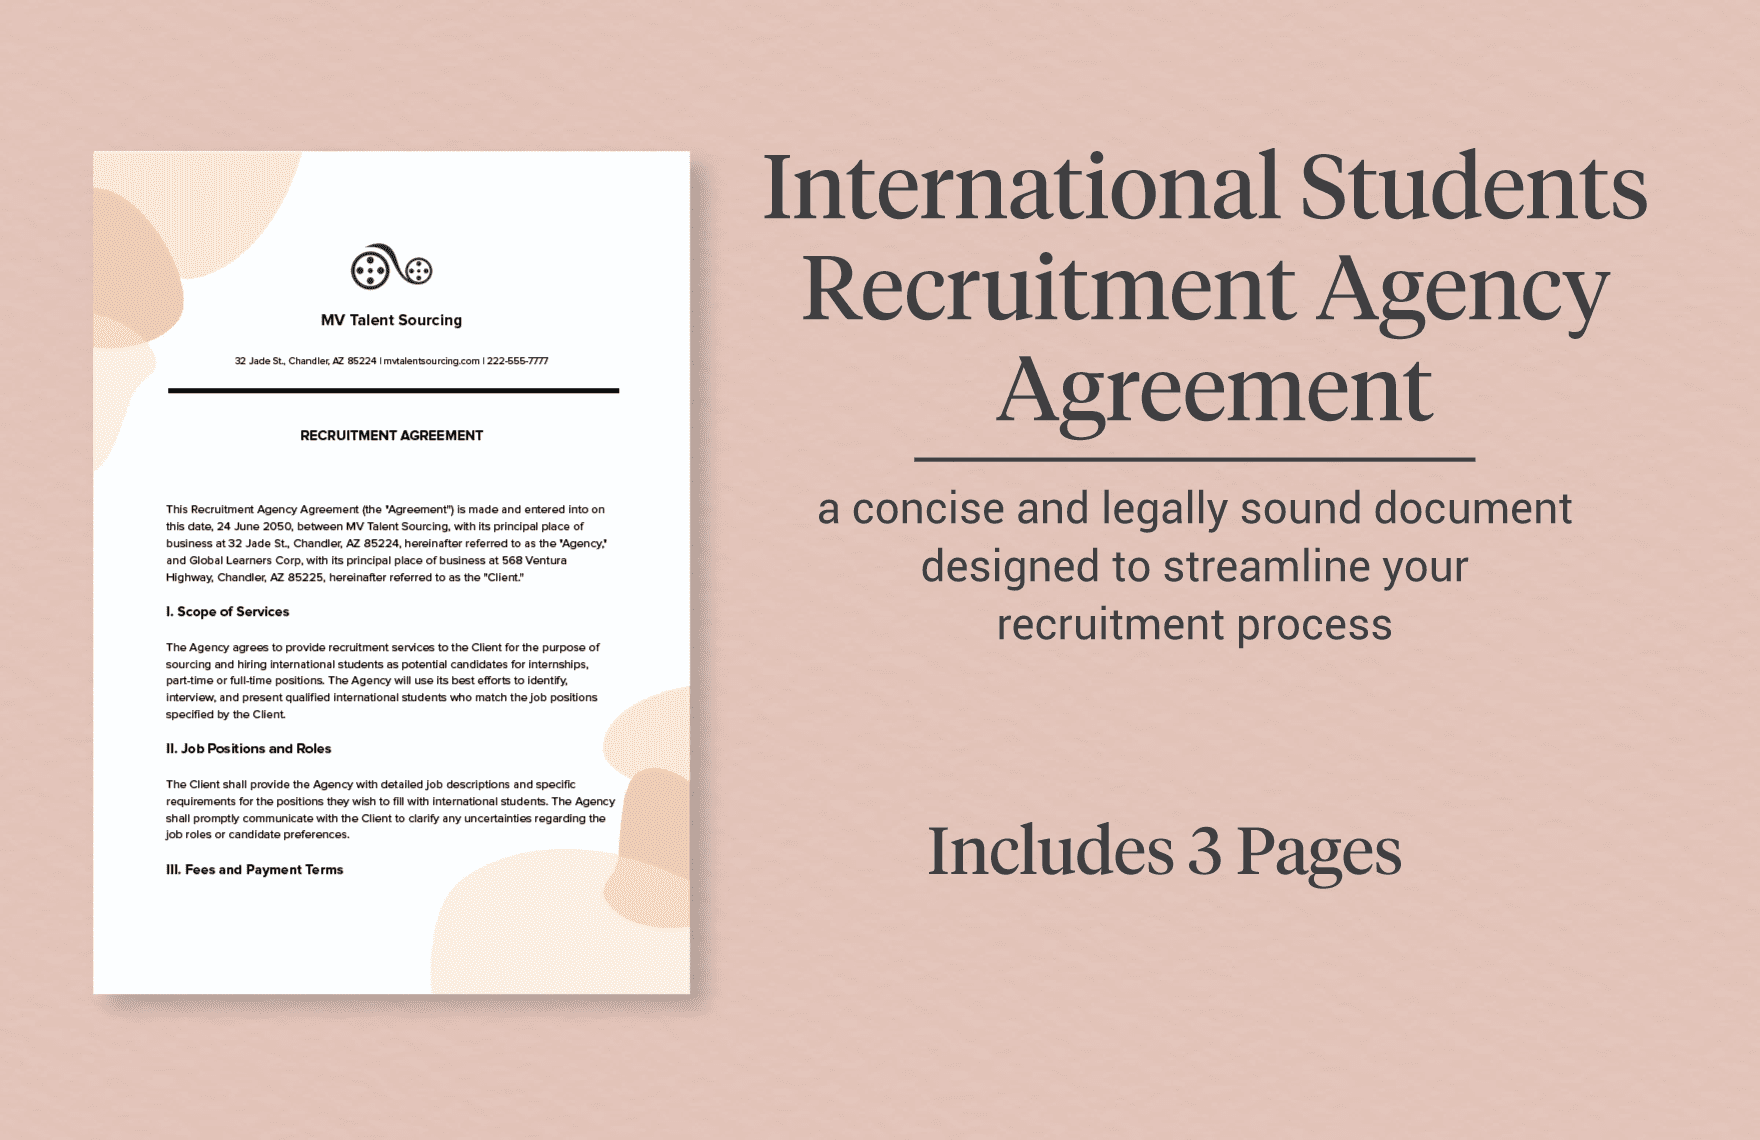 International Students Recruitment Agency Agreement